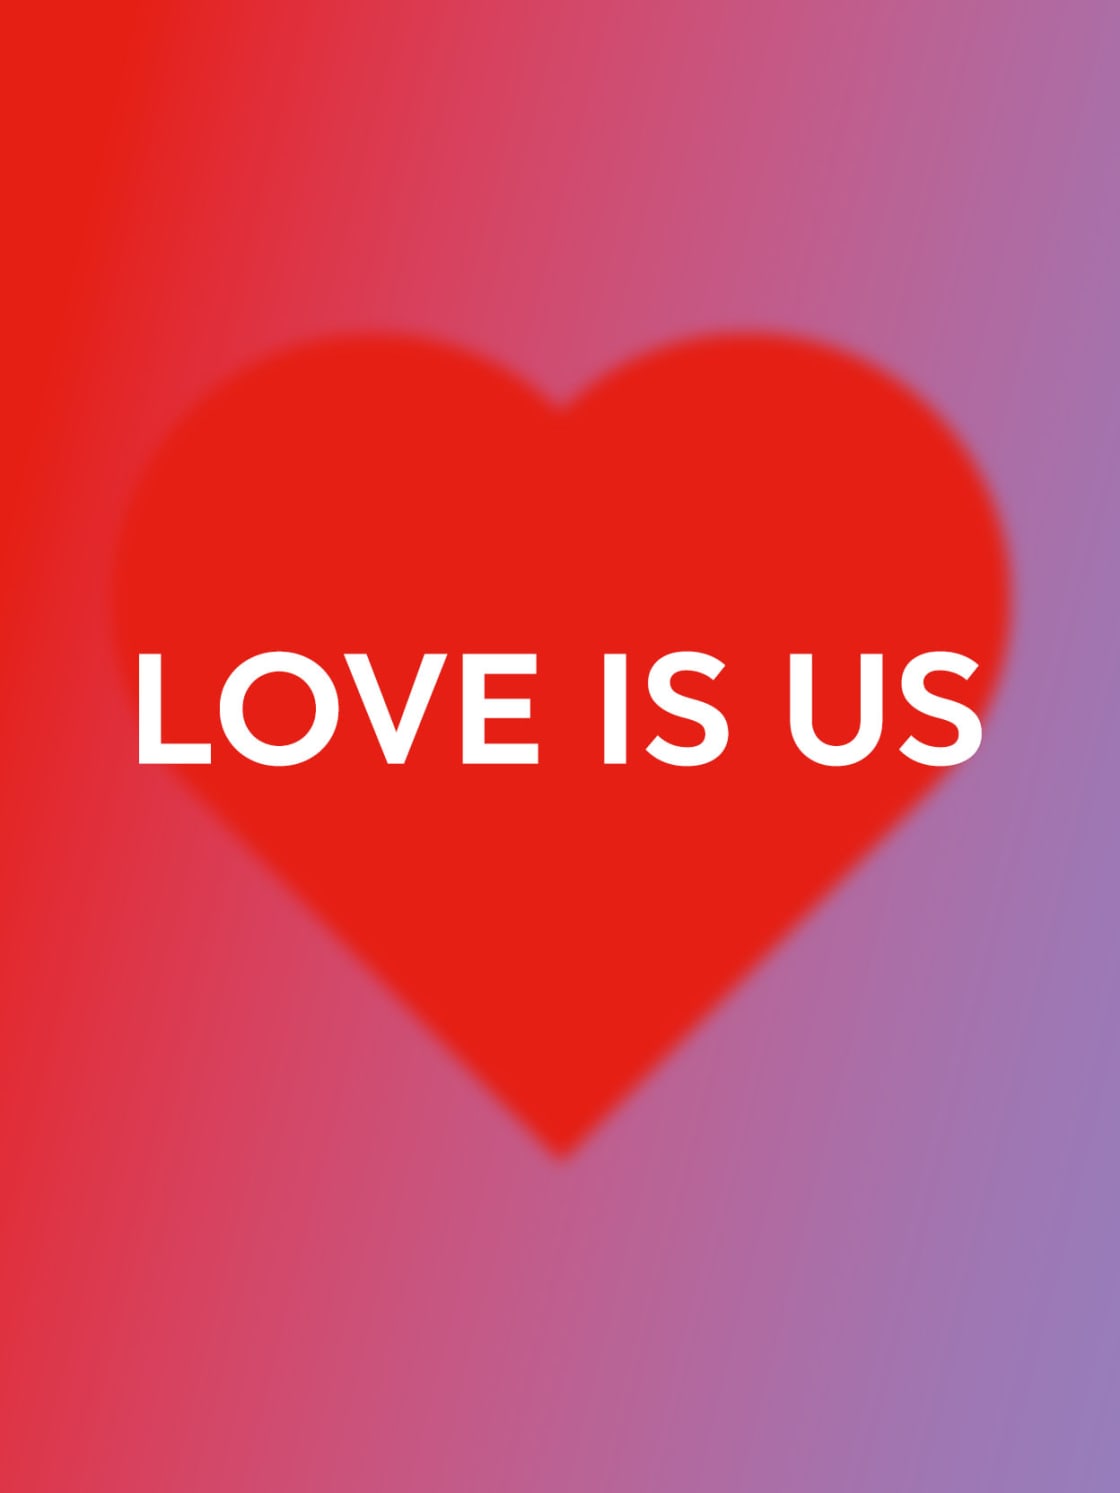 Love is us - Valentin's day